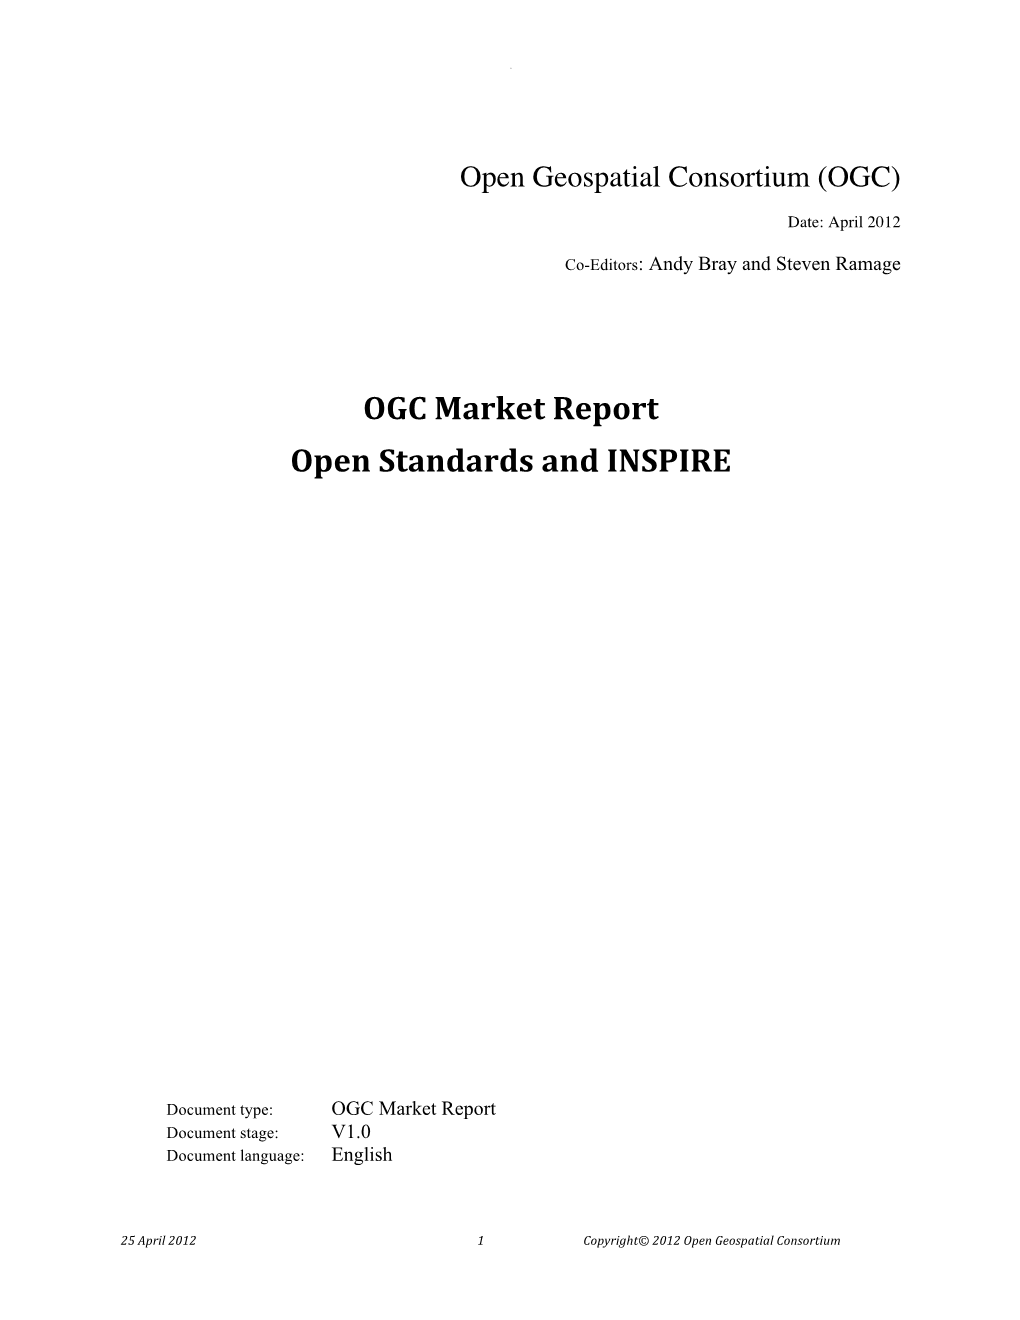 OGC Market Report Open Standards and INSPIRE